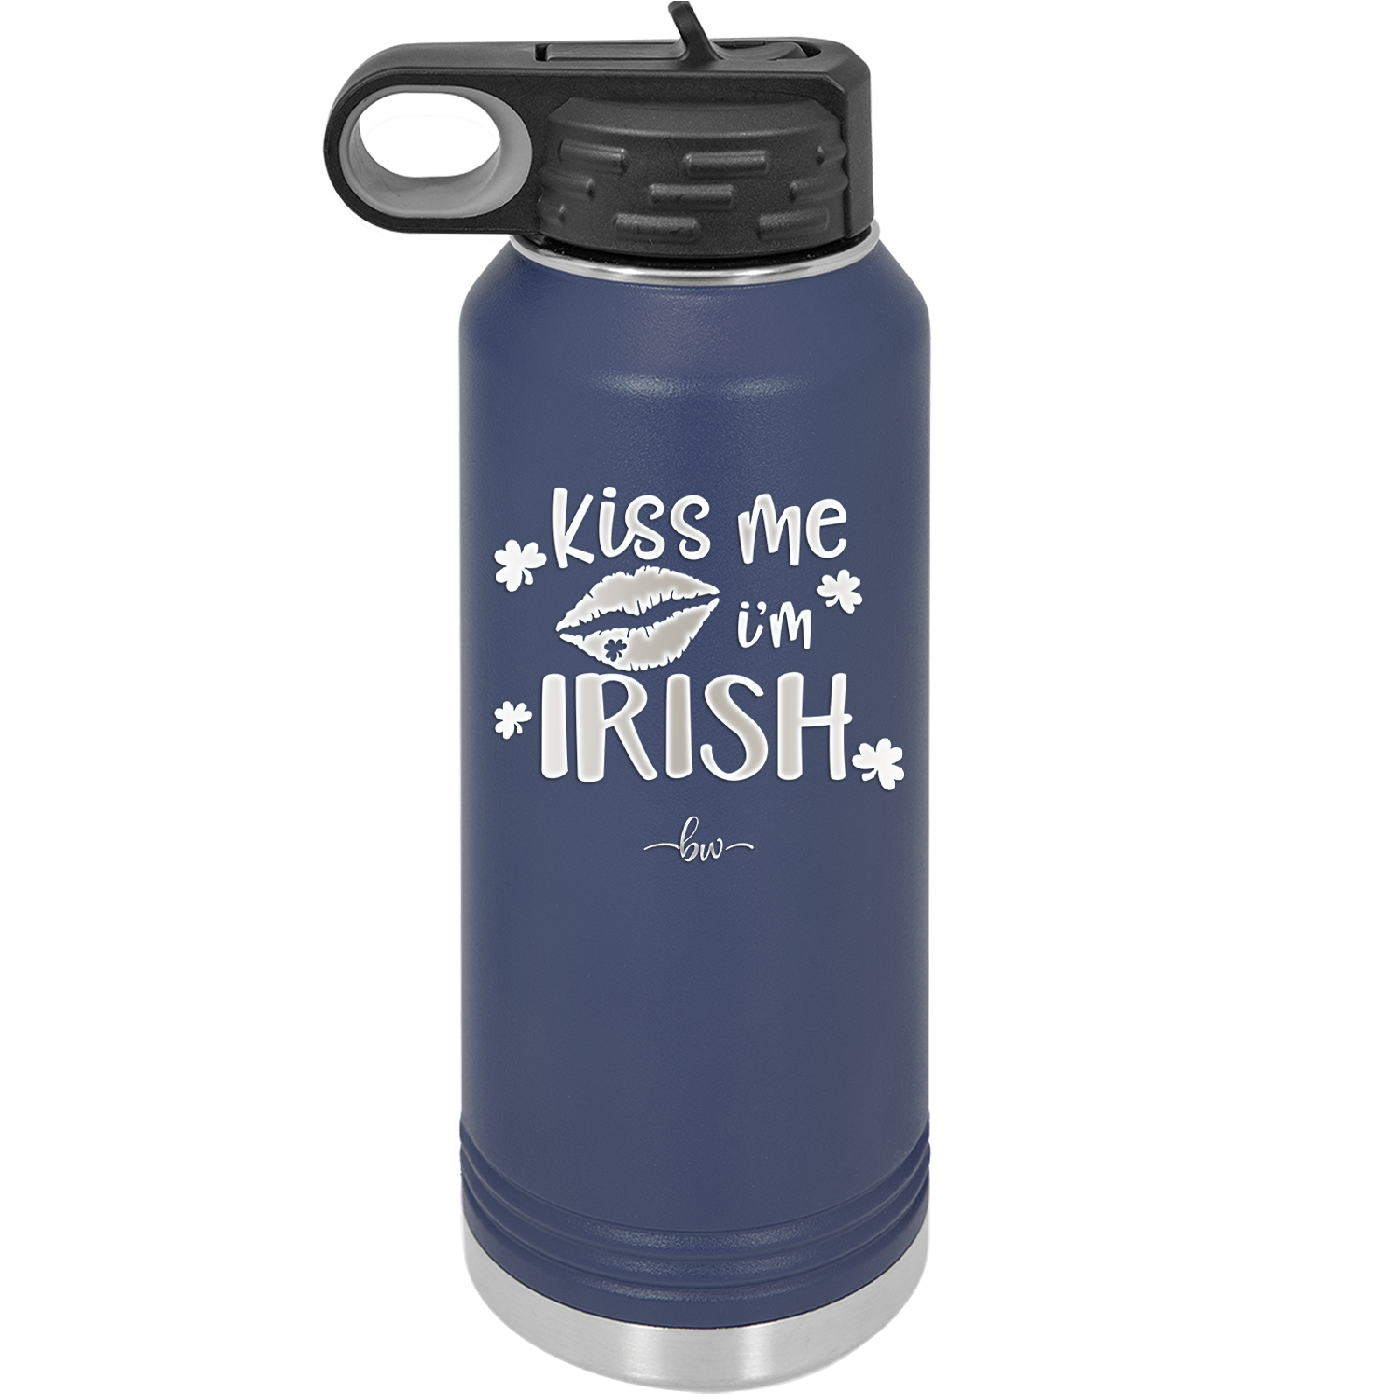 Kiss Me I'm Irish - Laser Engraved Stainless Steel Drinkware - 1790 -